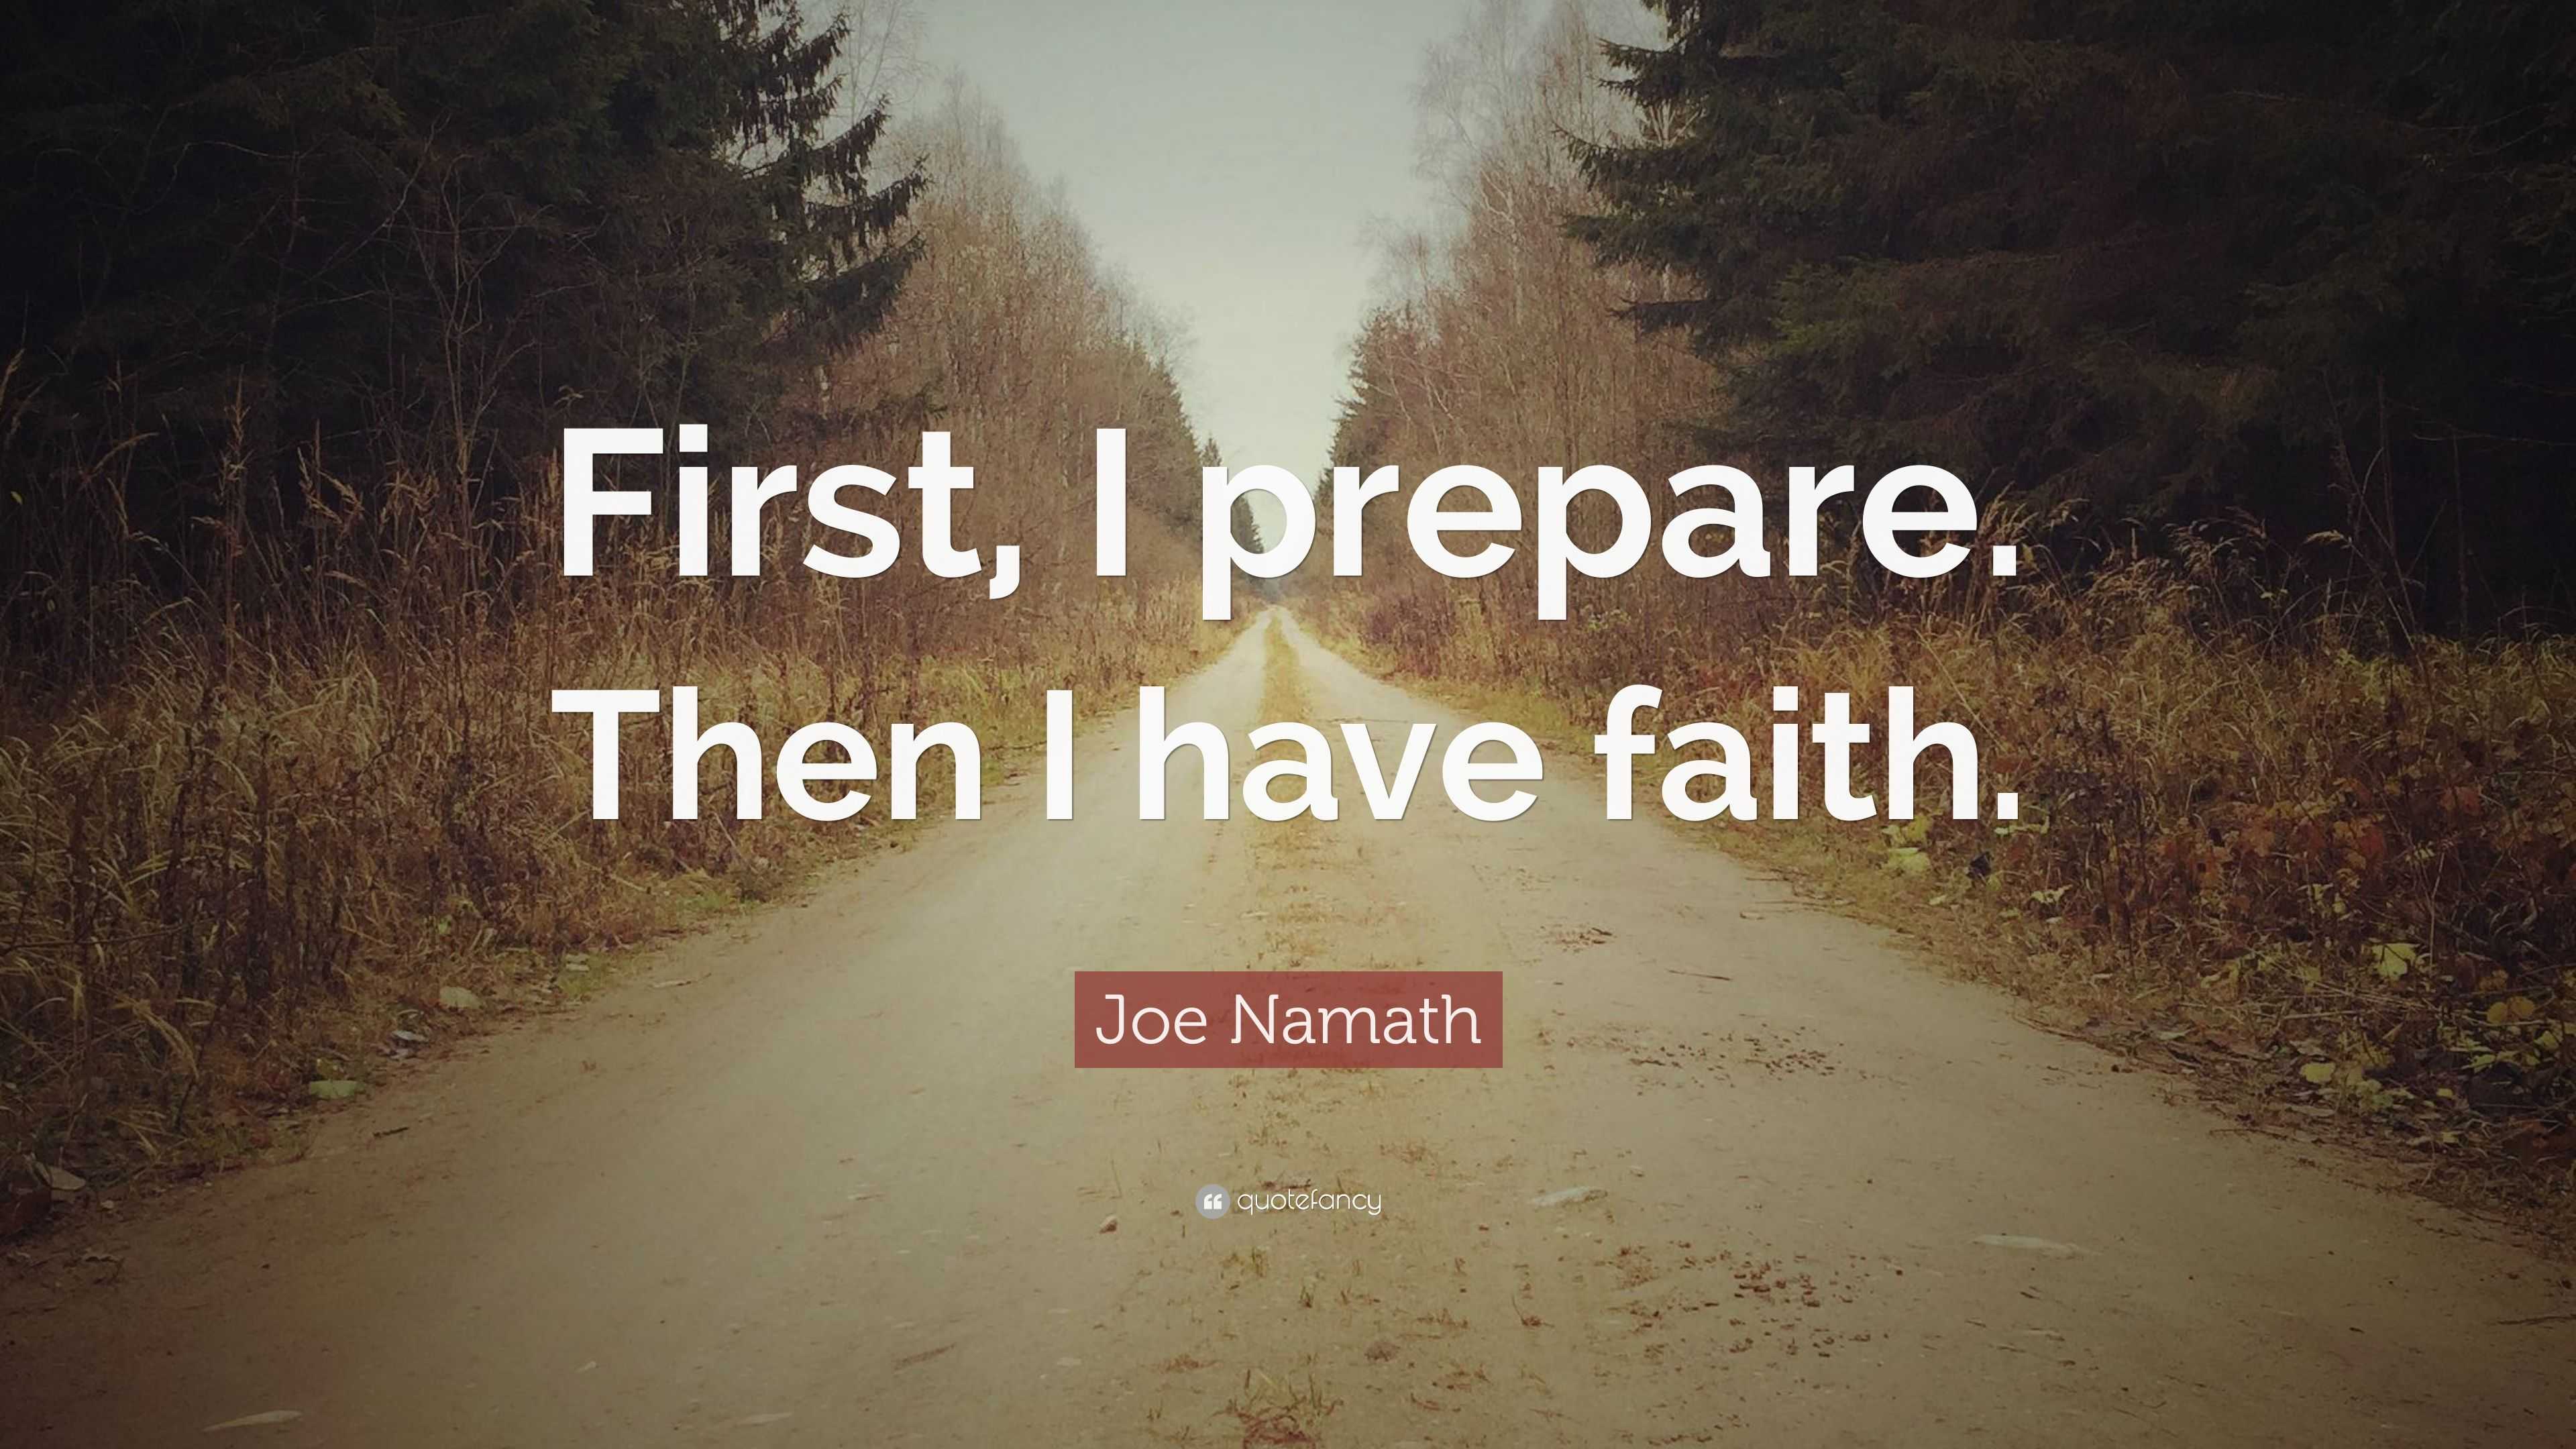 Joe Namath Quote: "First, I prepare. Then I have faith."